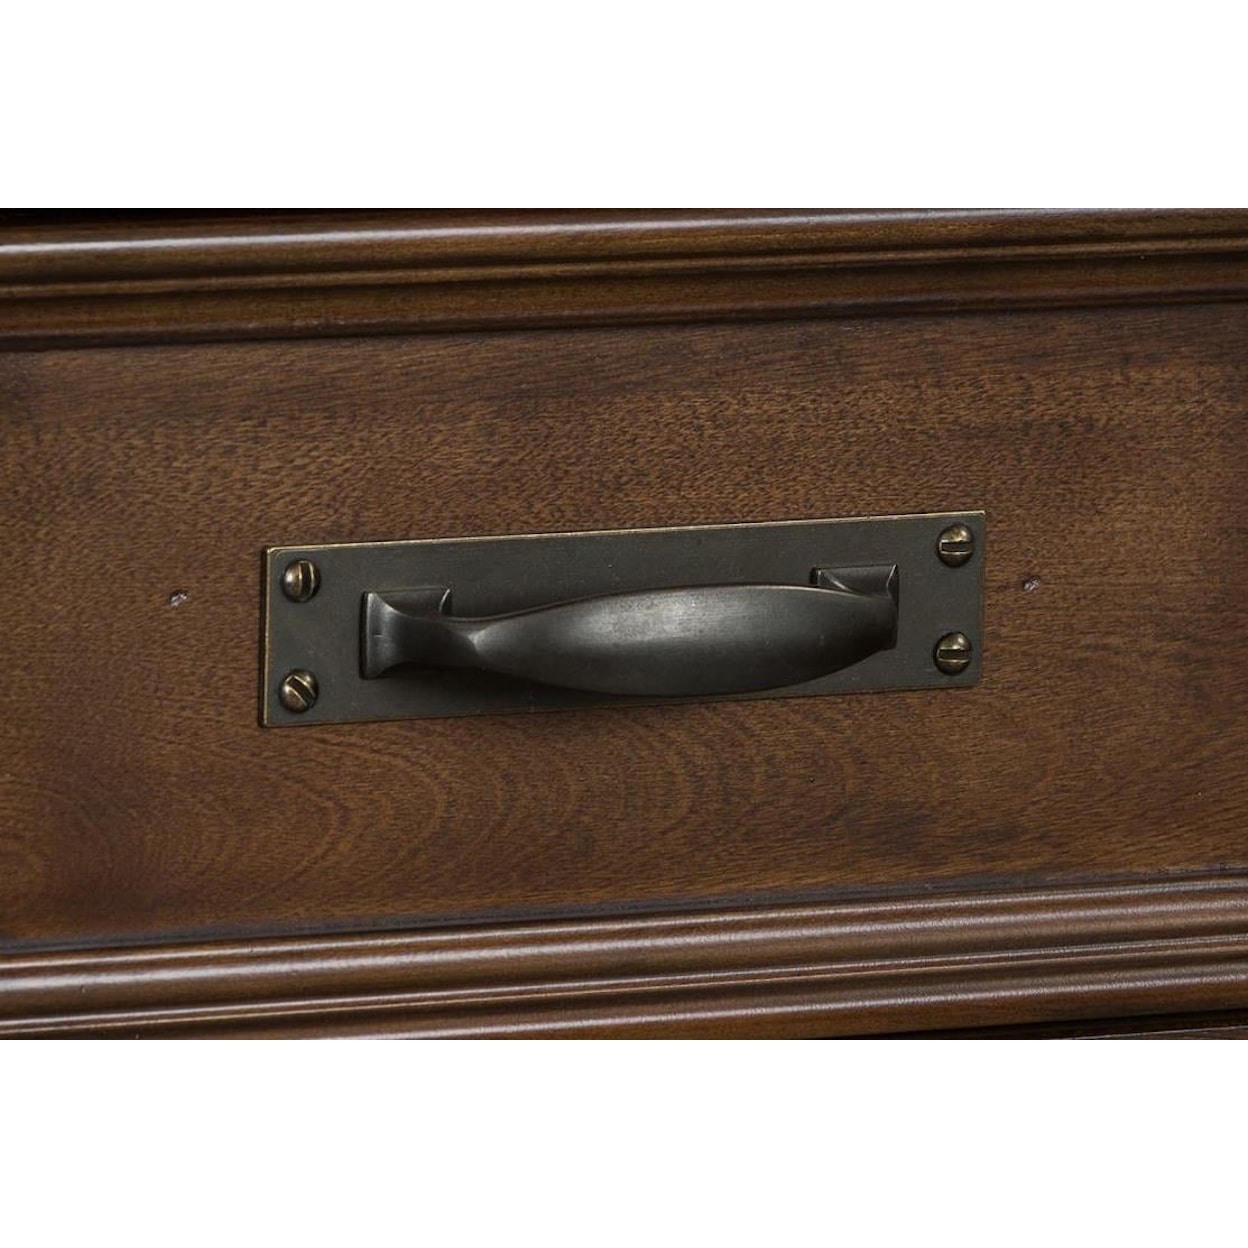 Liberty Furniture Saddlebrook 9-Drawer Dresser